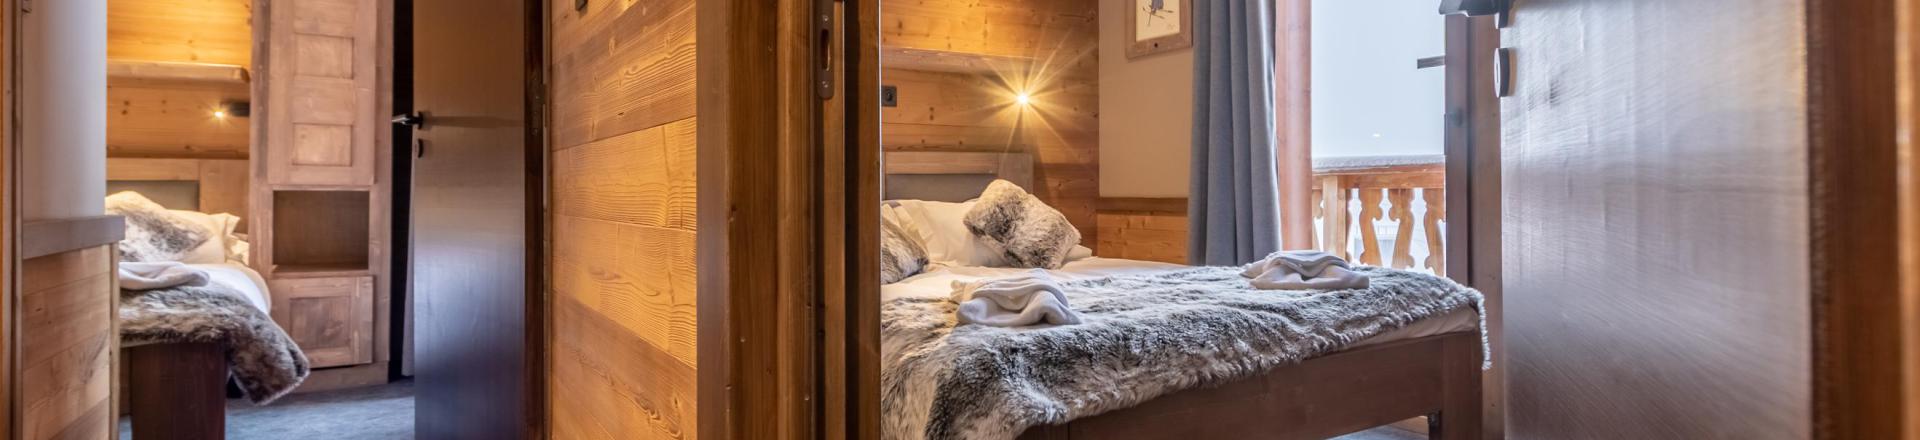 Rent in ski resort 7 room duplex apartment 12 people - Chalet Altitude - Val Thorens - Bedroom